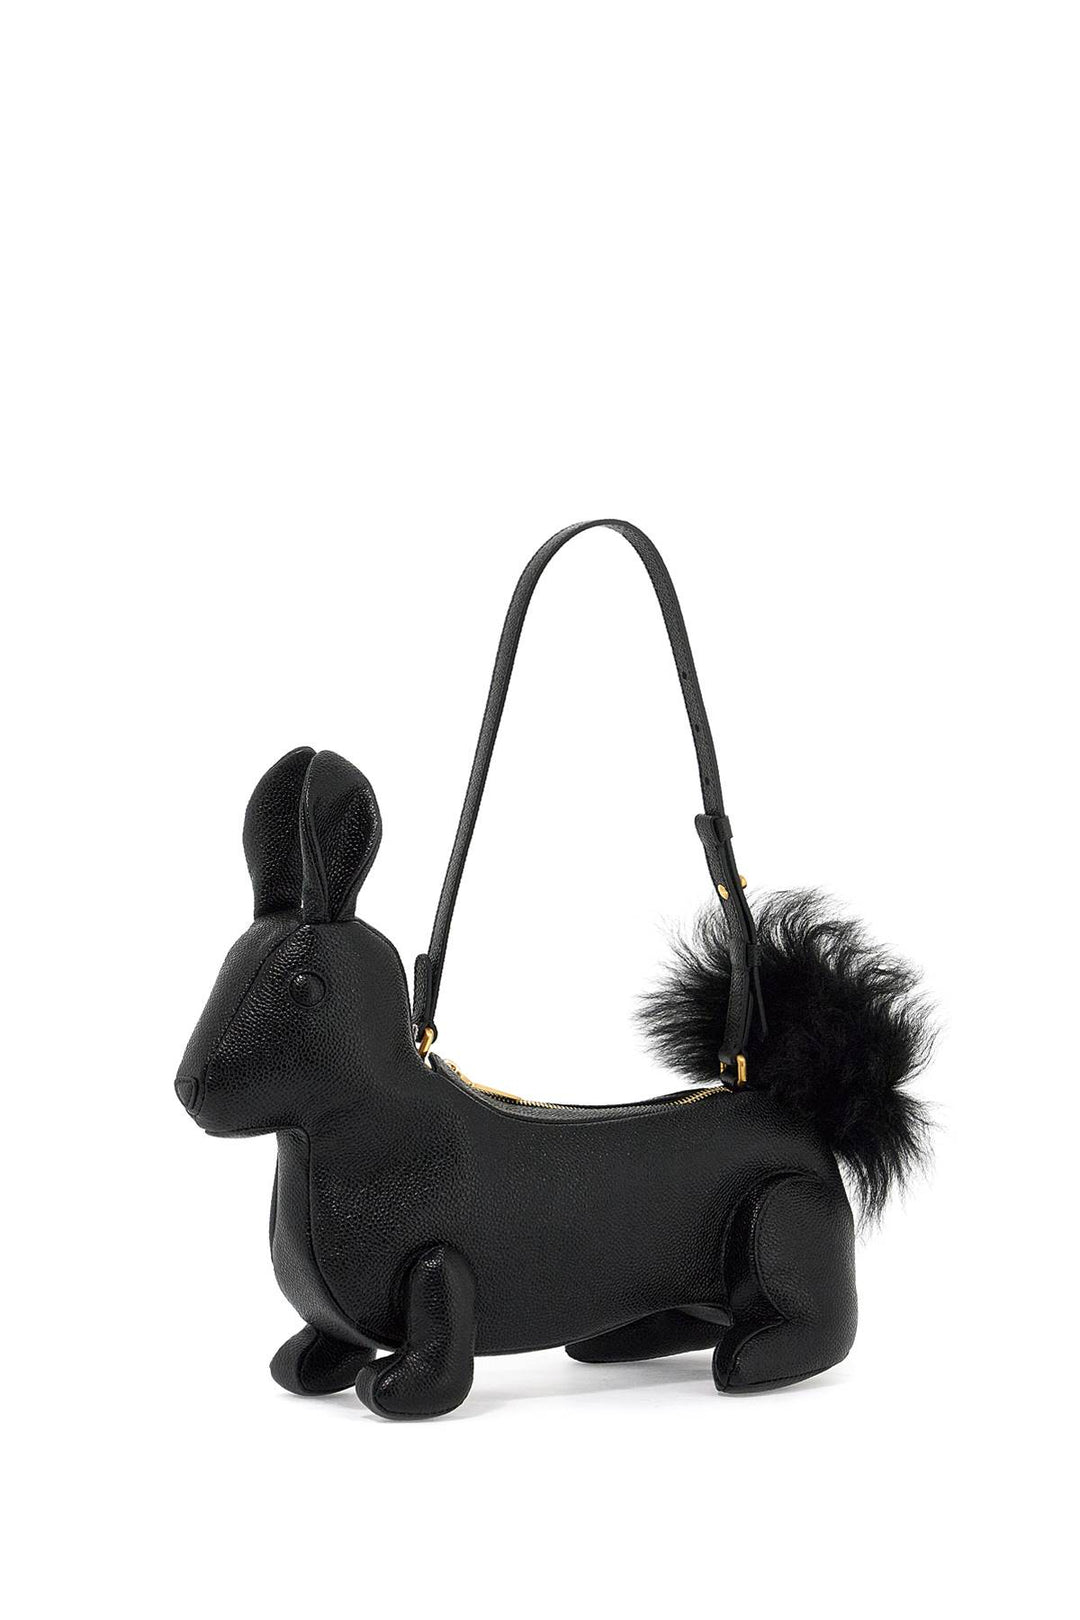 fur handbag with chain-2